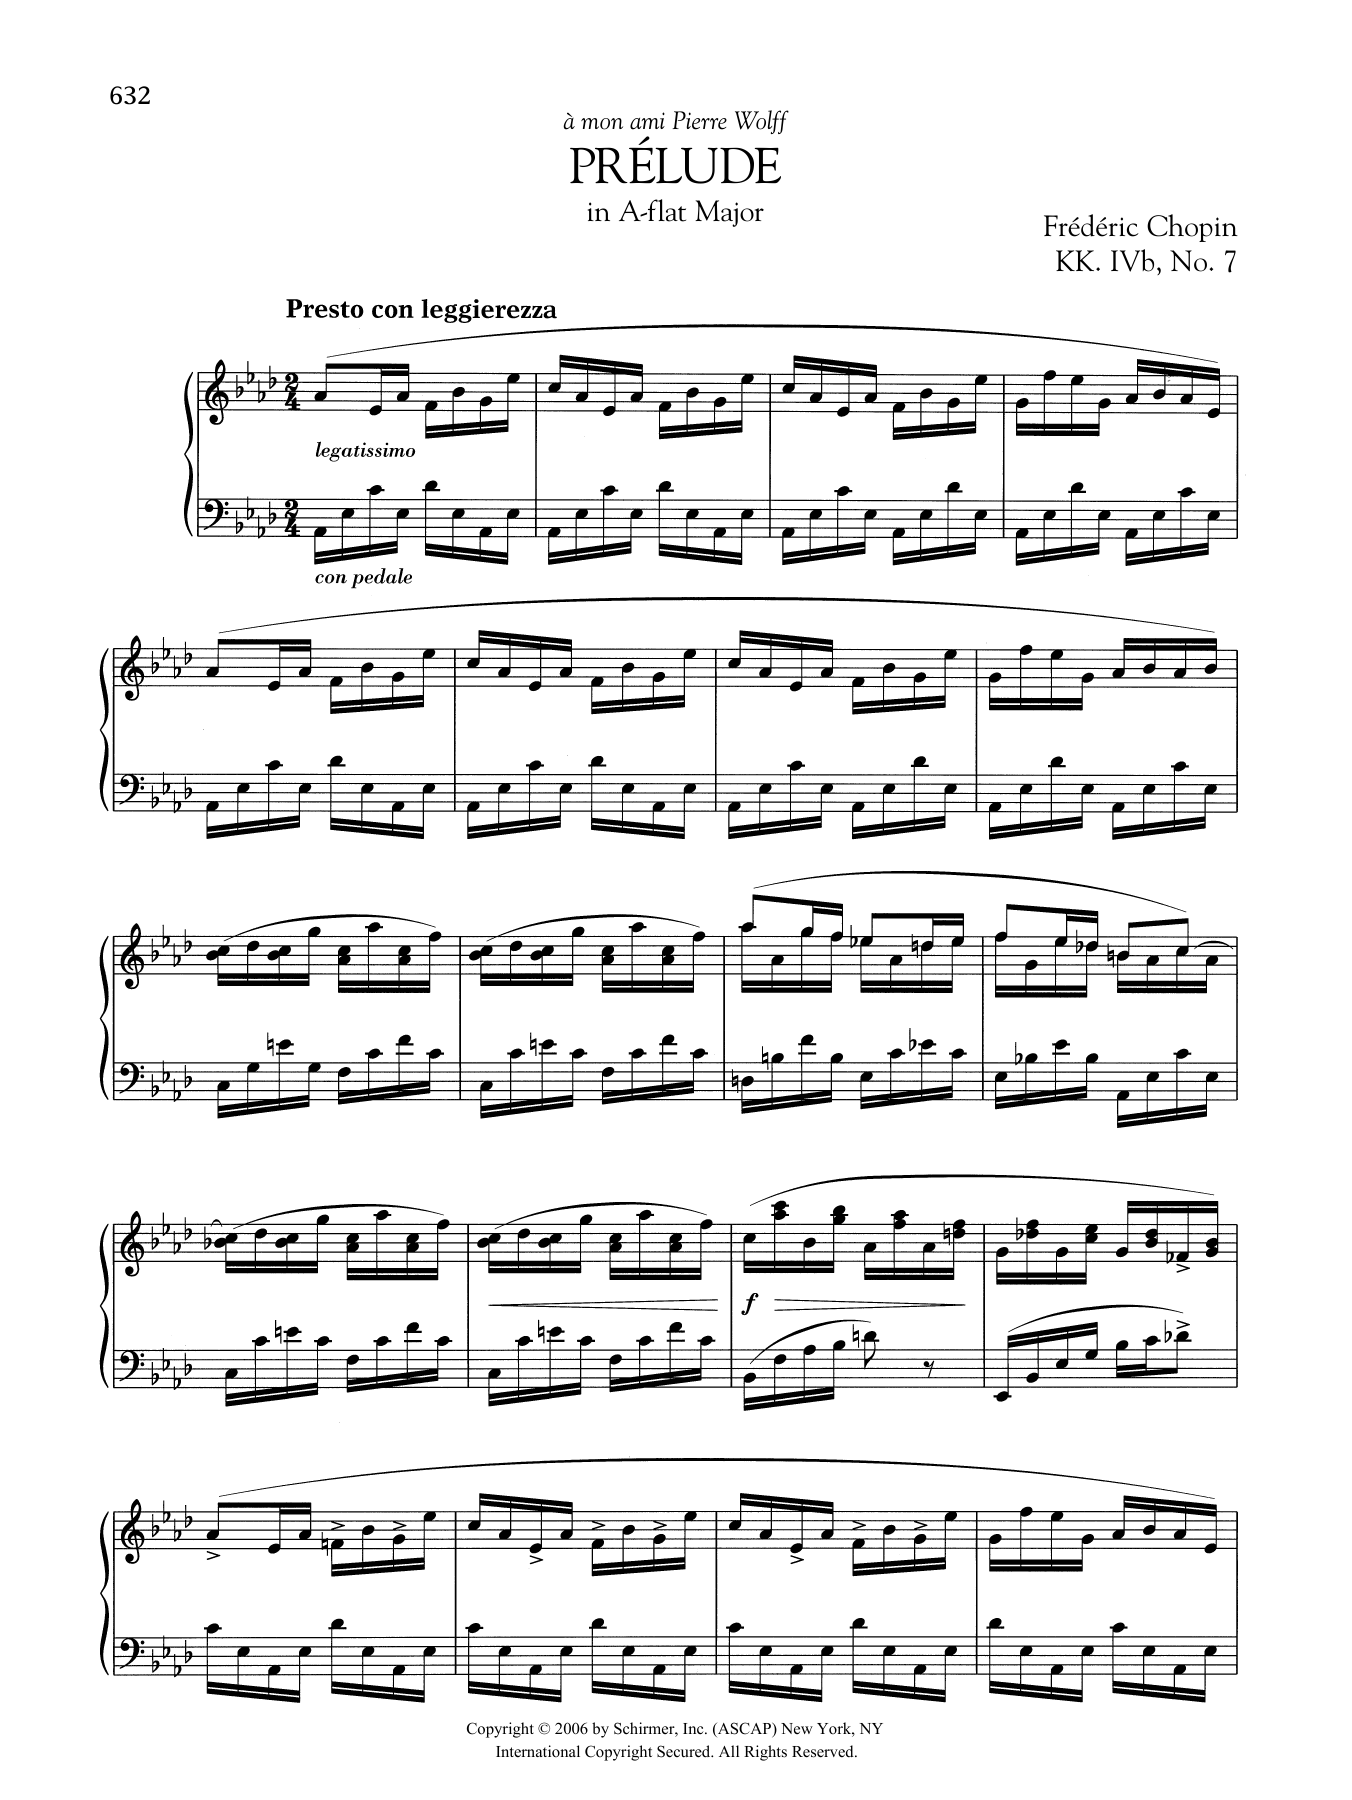 Prélude in A-flat Major, KK. IVb, No. 7 sheet music